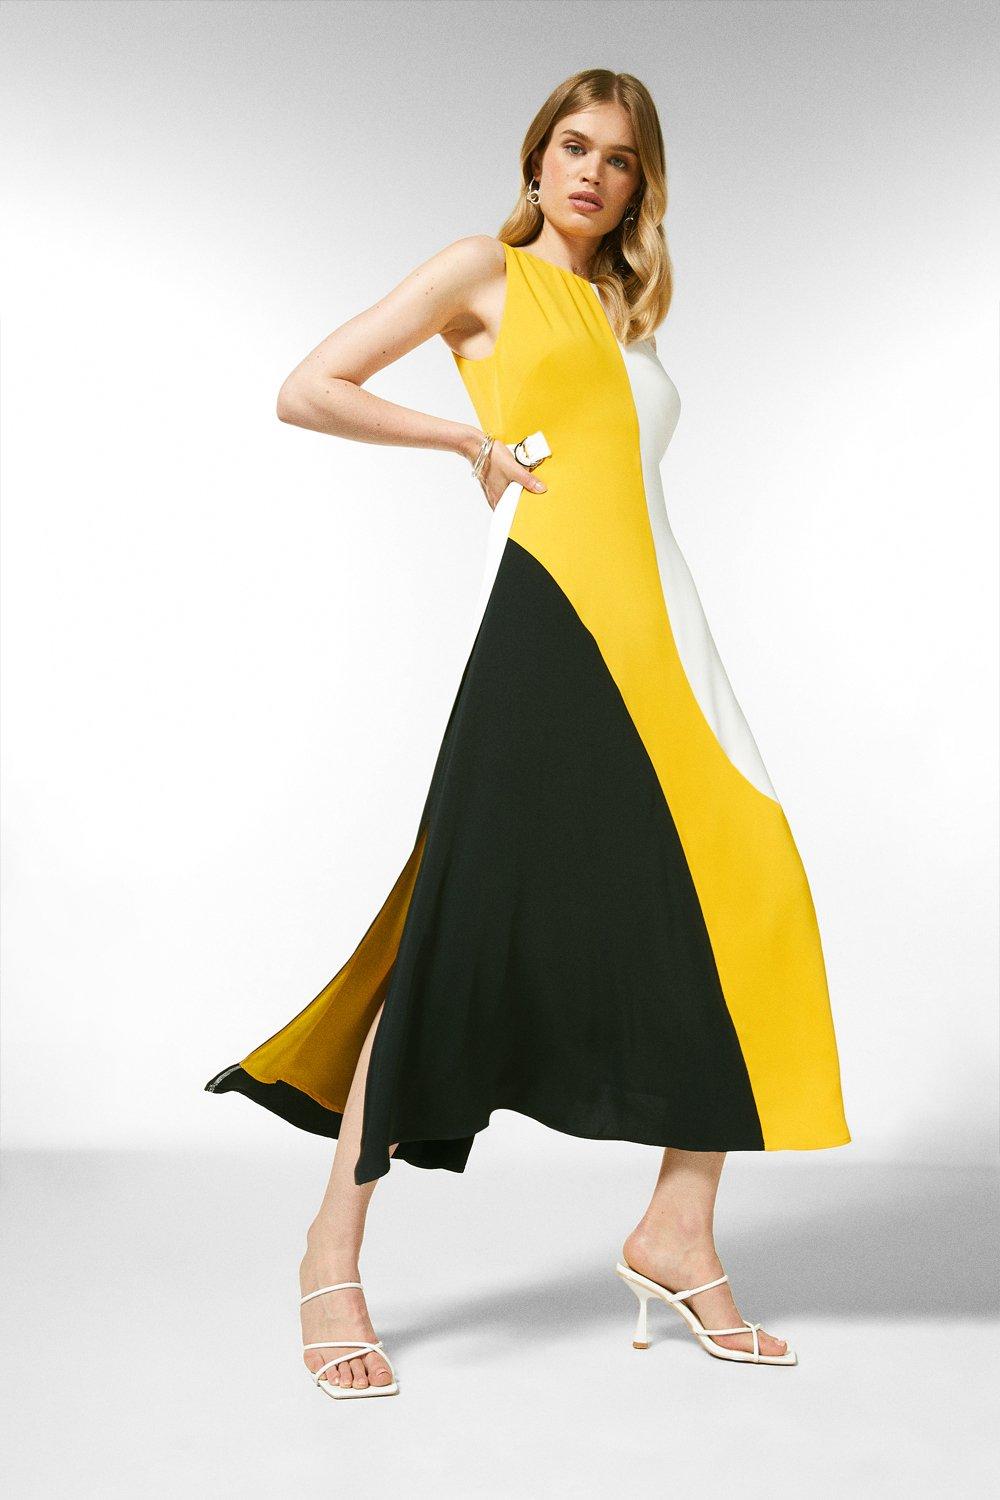 Petite Soft Tailored Color Block Dress Karen Millen, 47% OFF